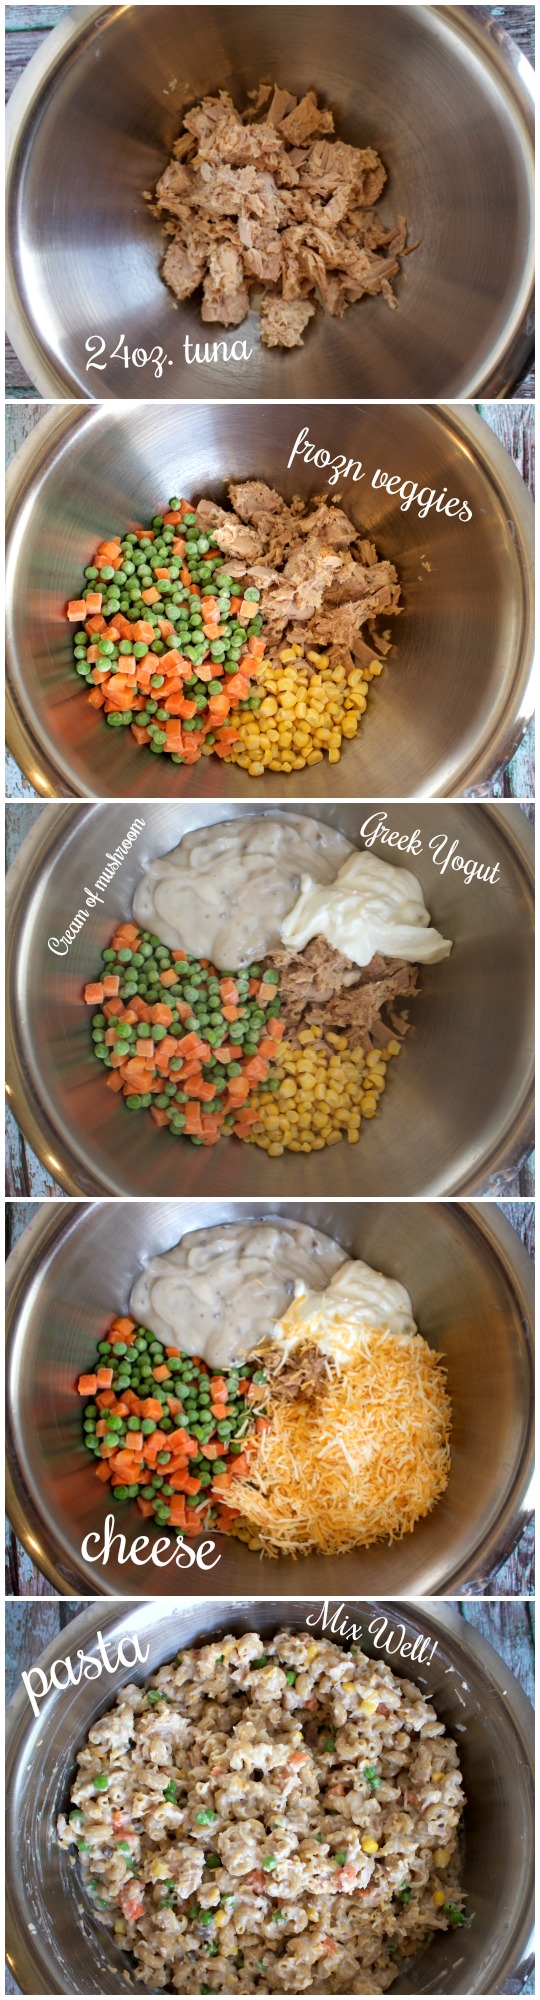 high protein, macro friendly tuna casserole the whole family will love!